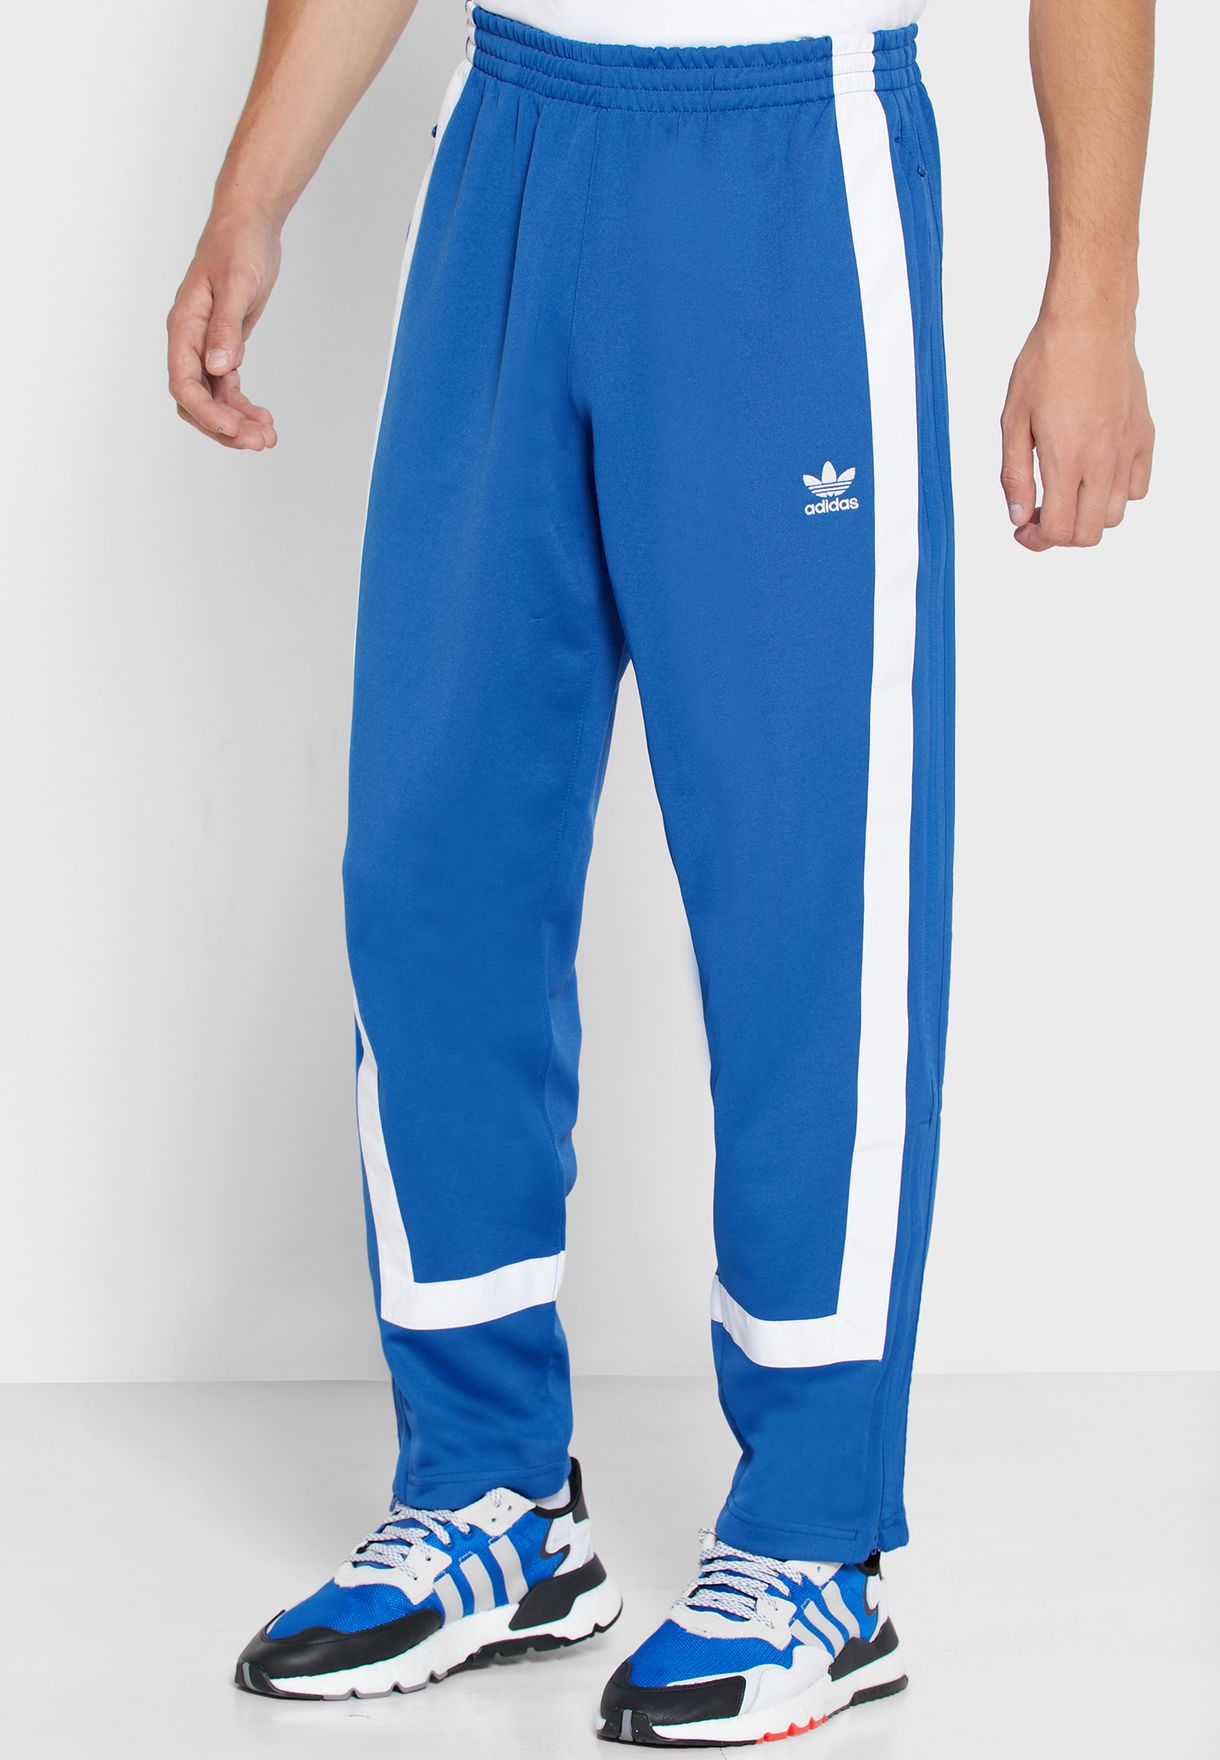 adidas originals blue track pants